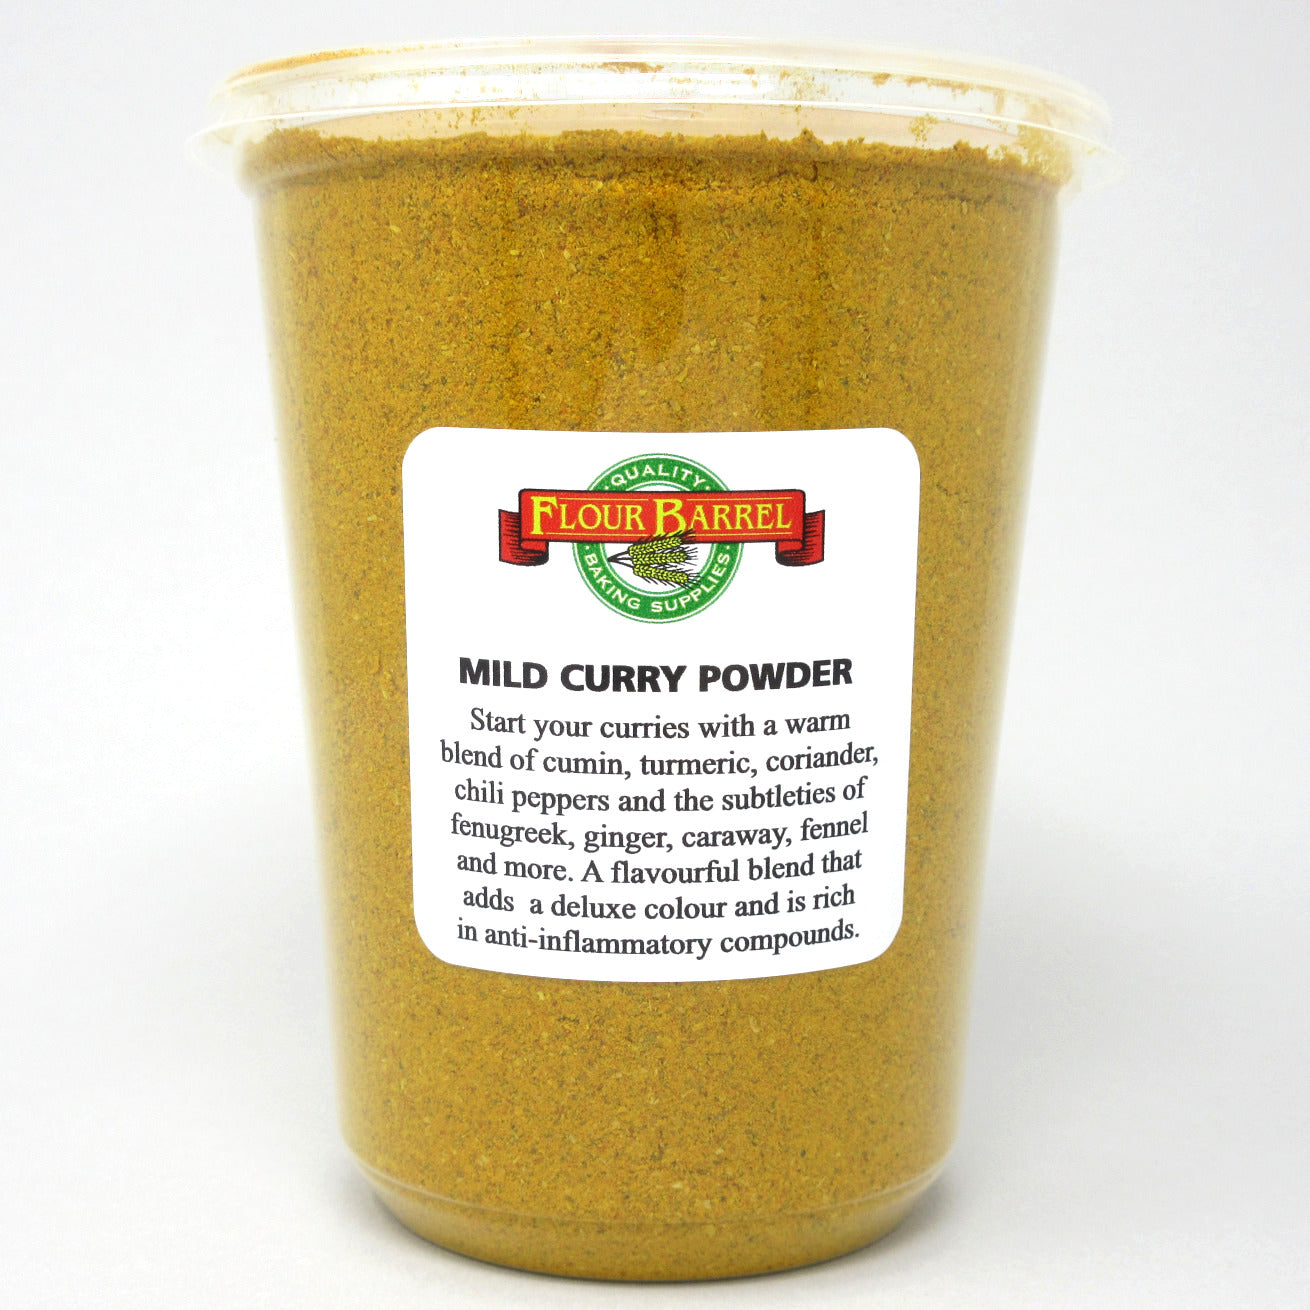 Flour Barrel product image - Mild Curry Powder